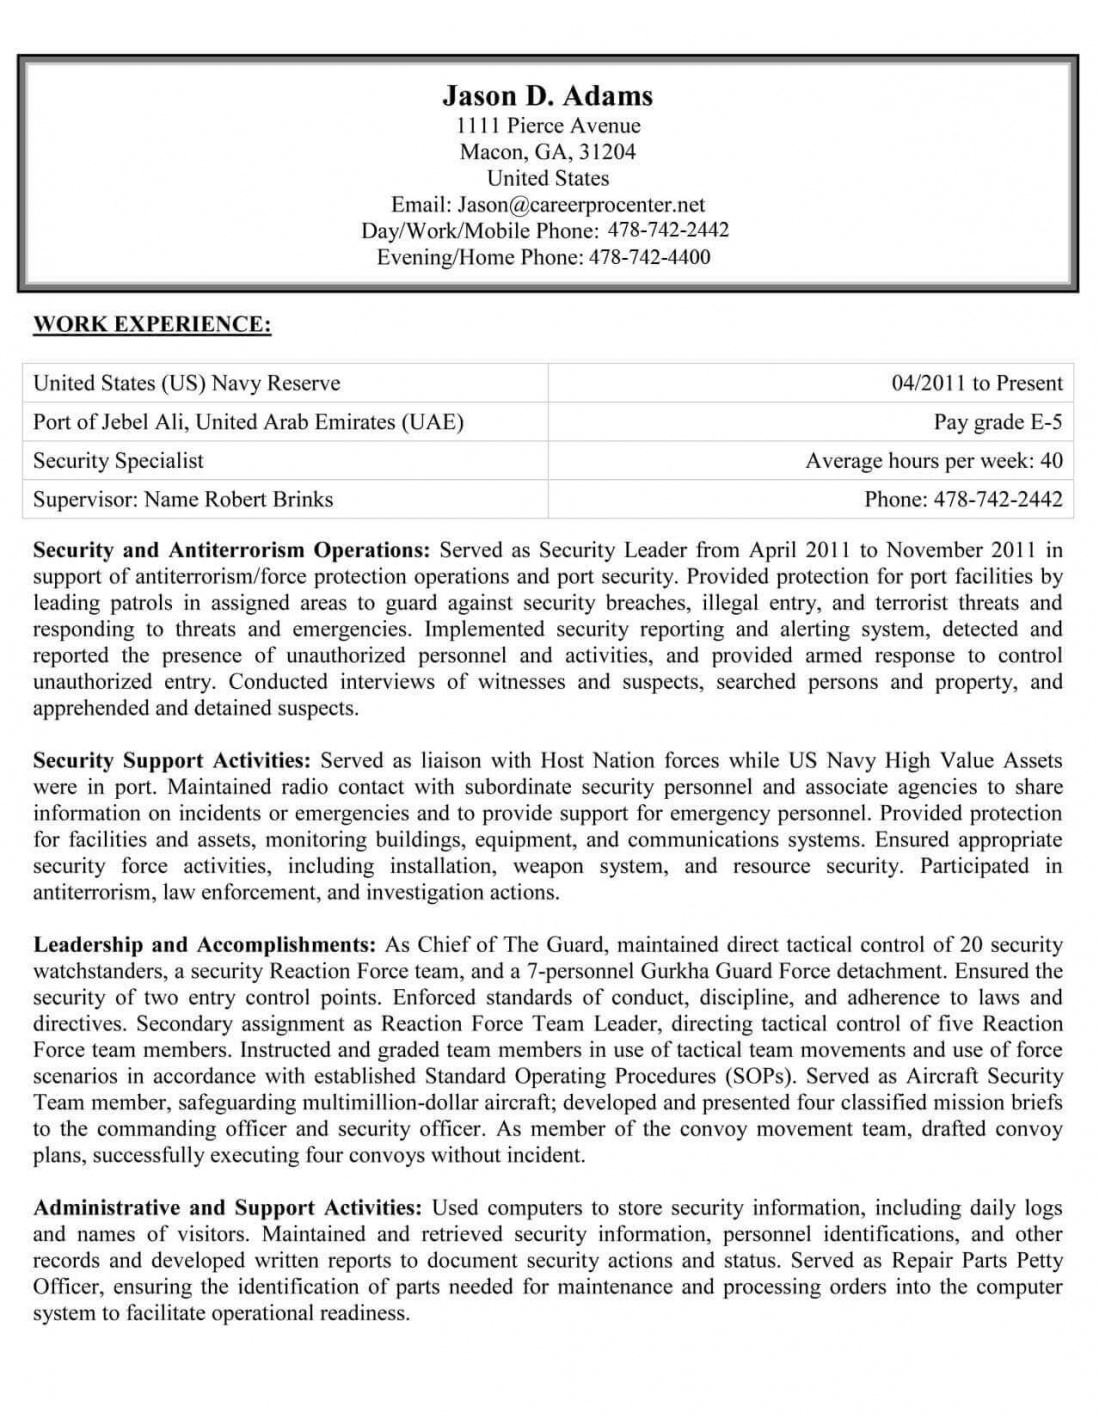 Federal Resume Template Federal Resume Sample New Samples Careerproplus Usajobs Resumes Usa federal resume template|wikiresume.com